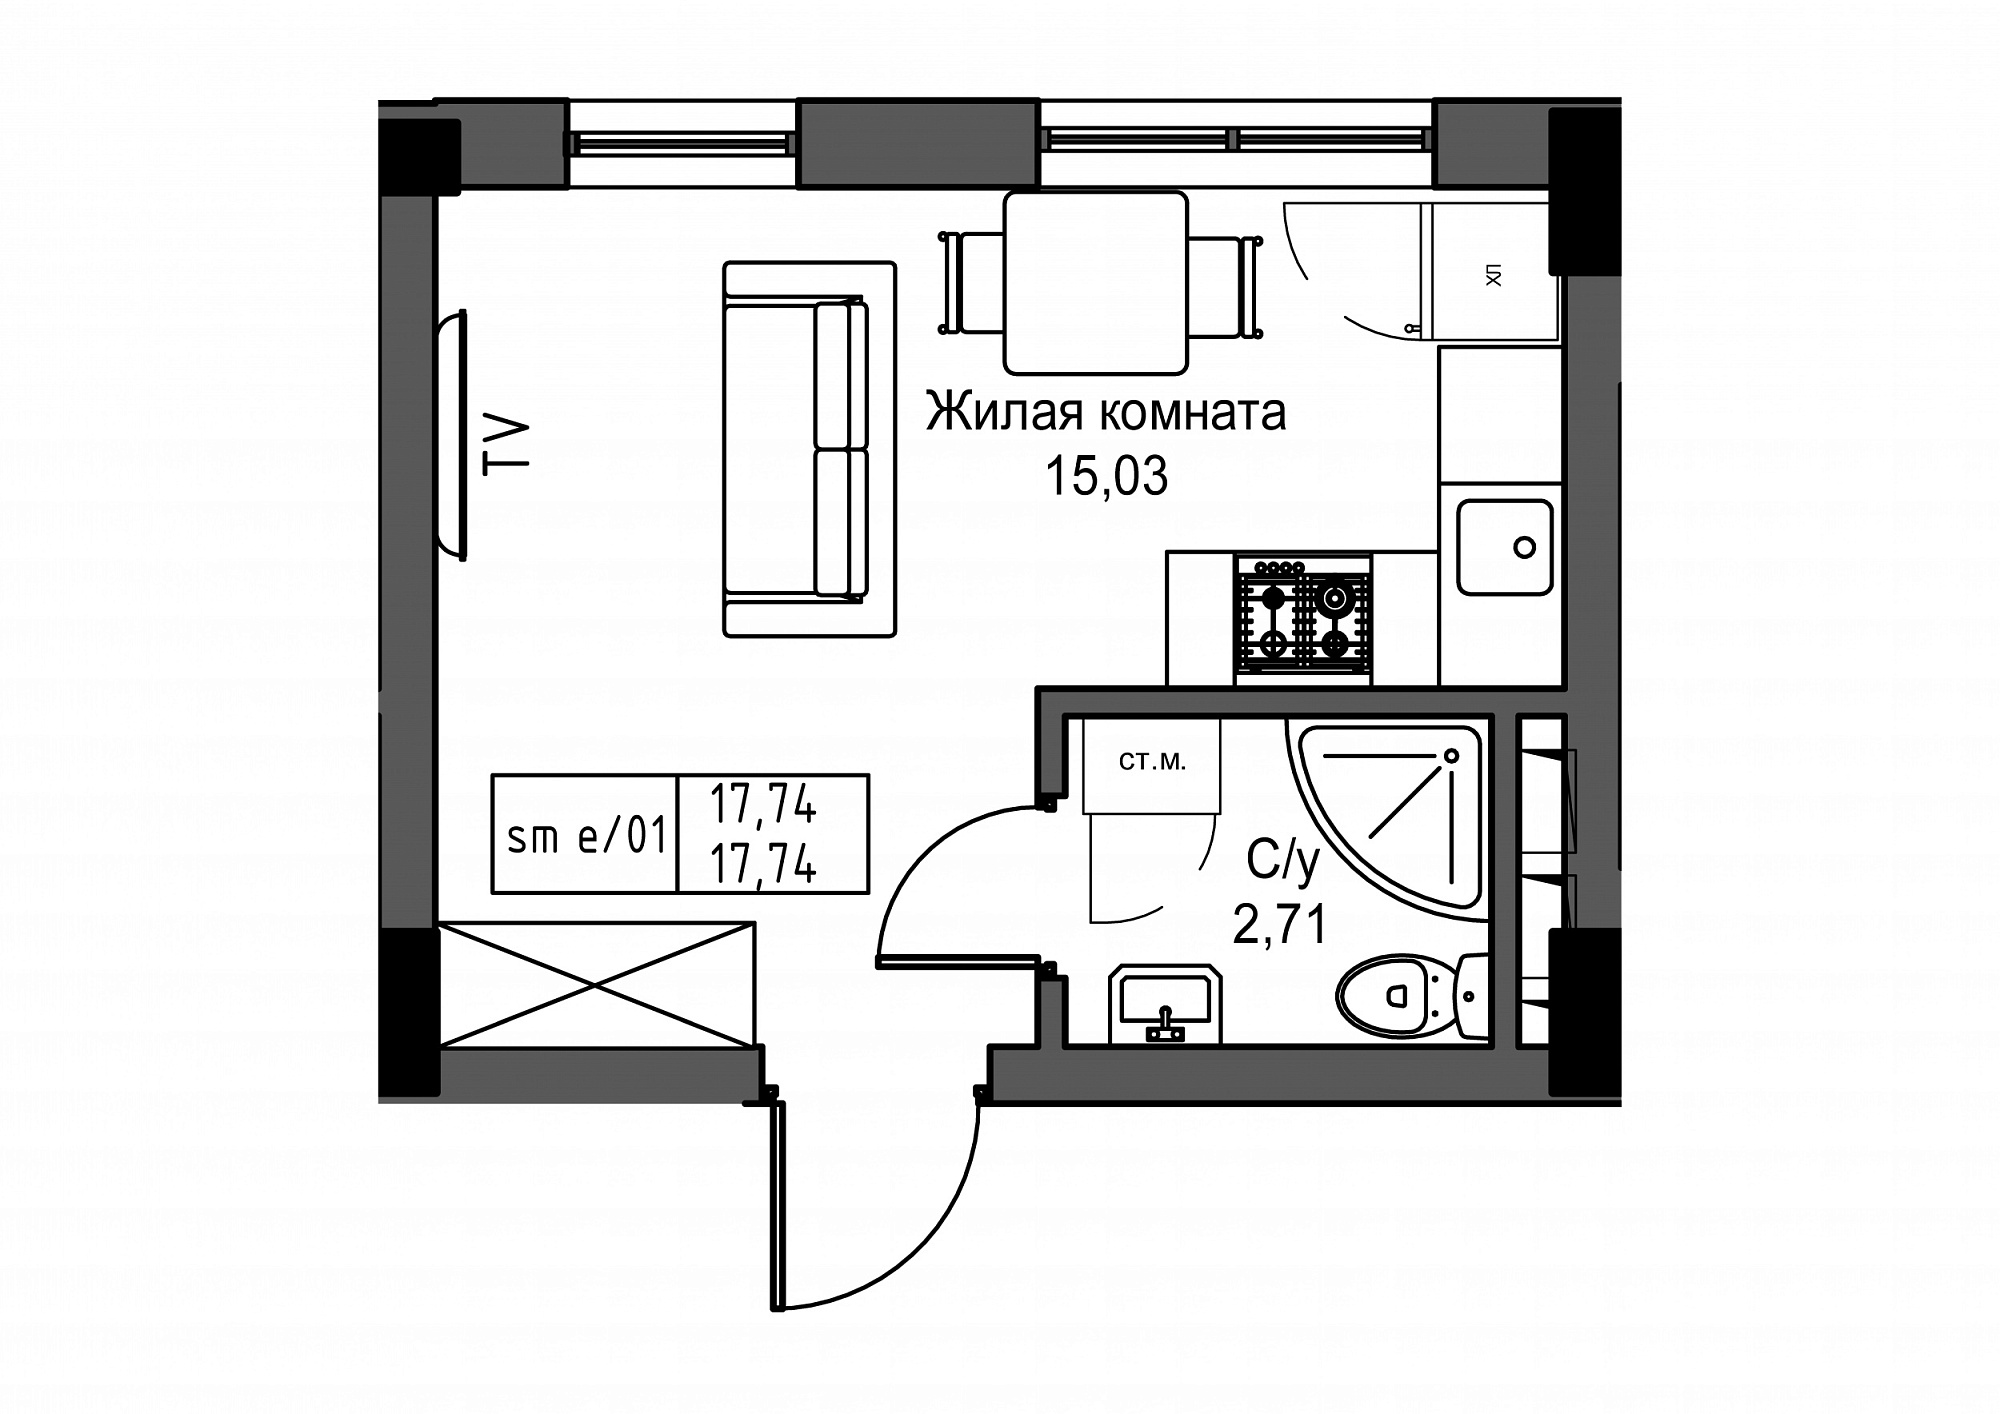 Planning Smart flats area 17.74m2, UM-003-02/0015.